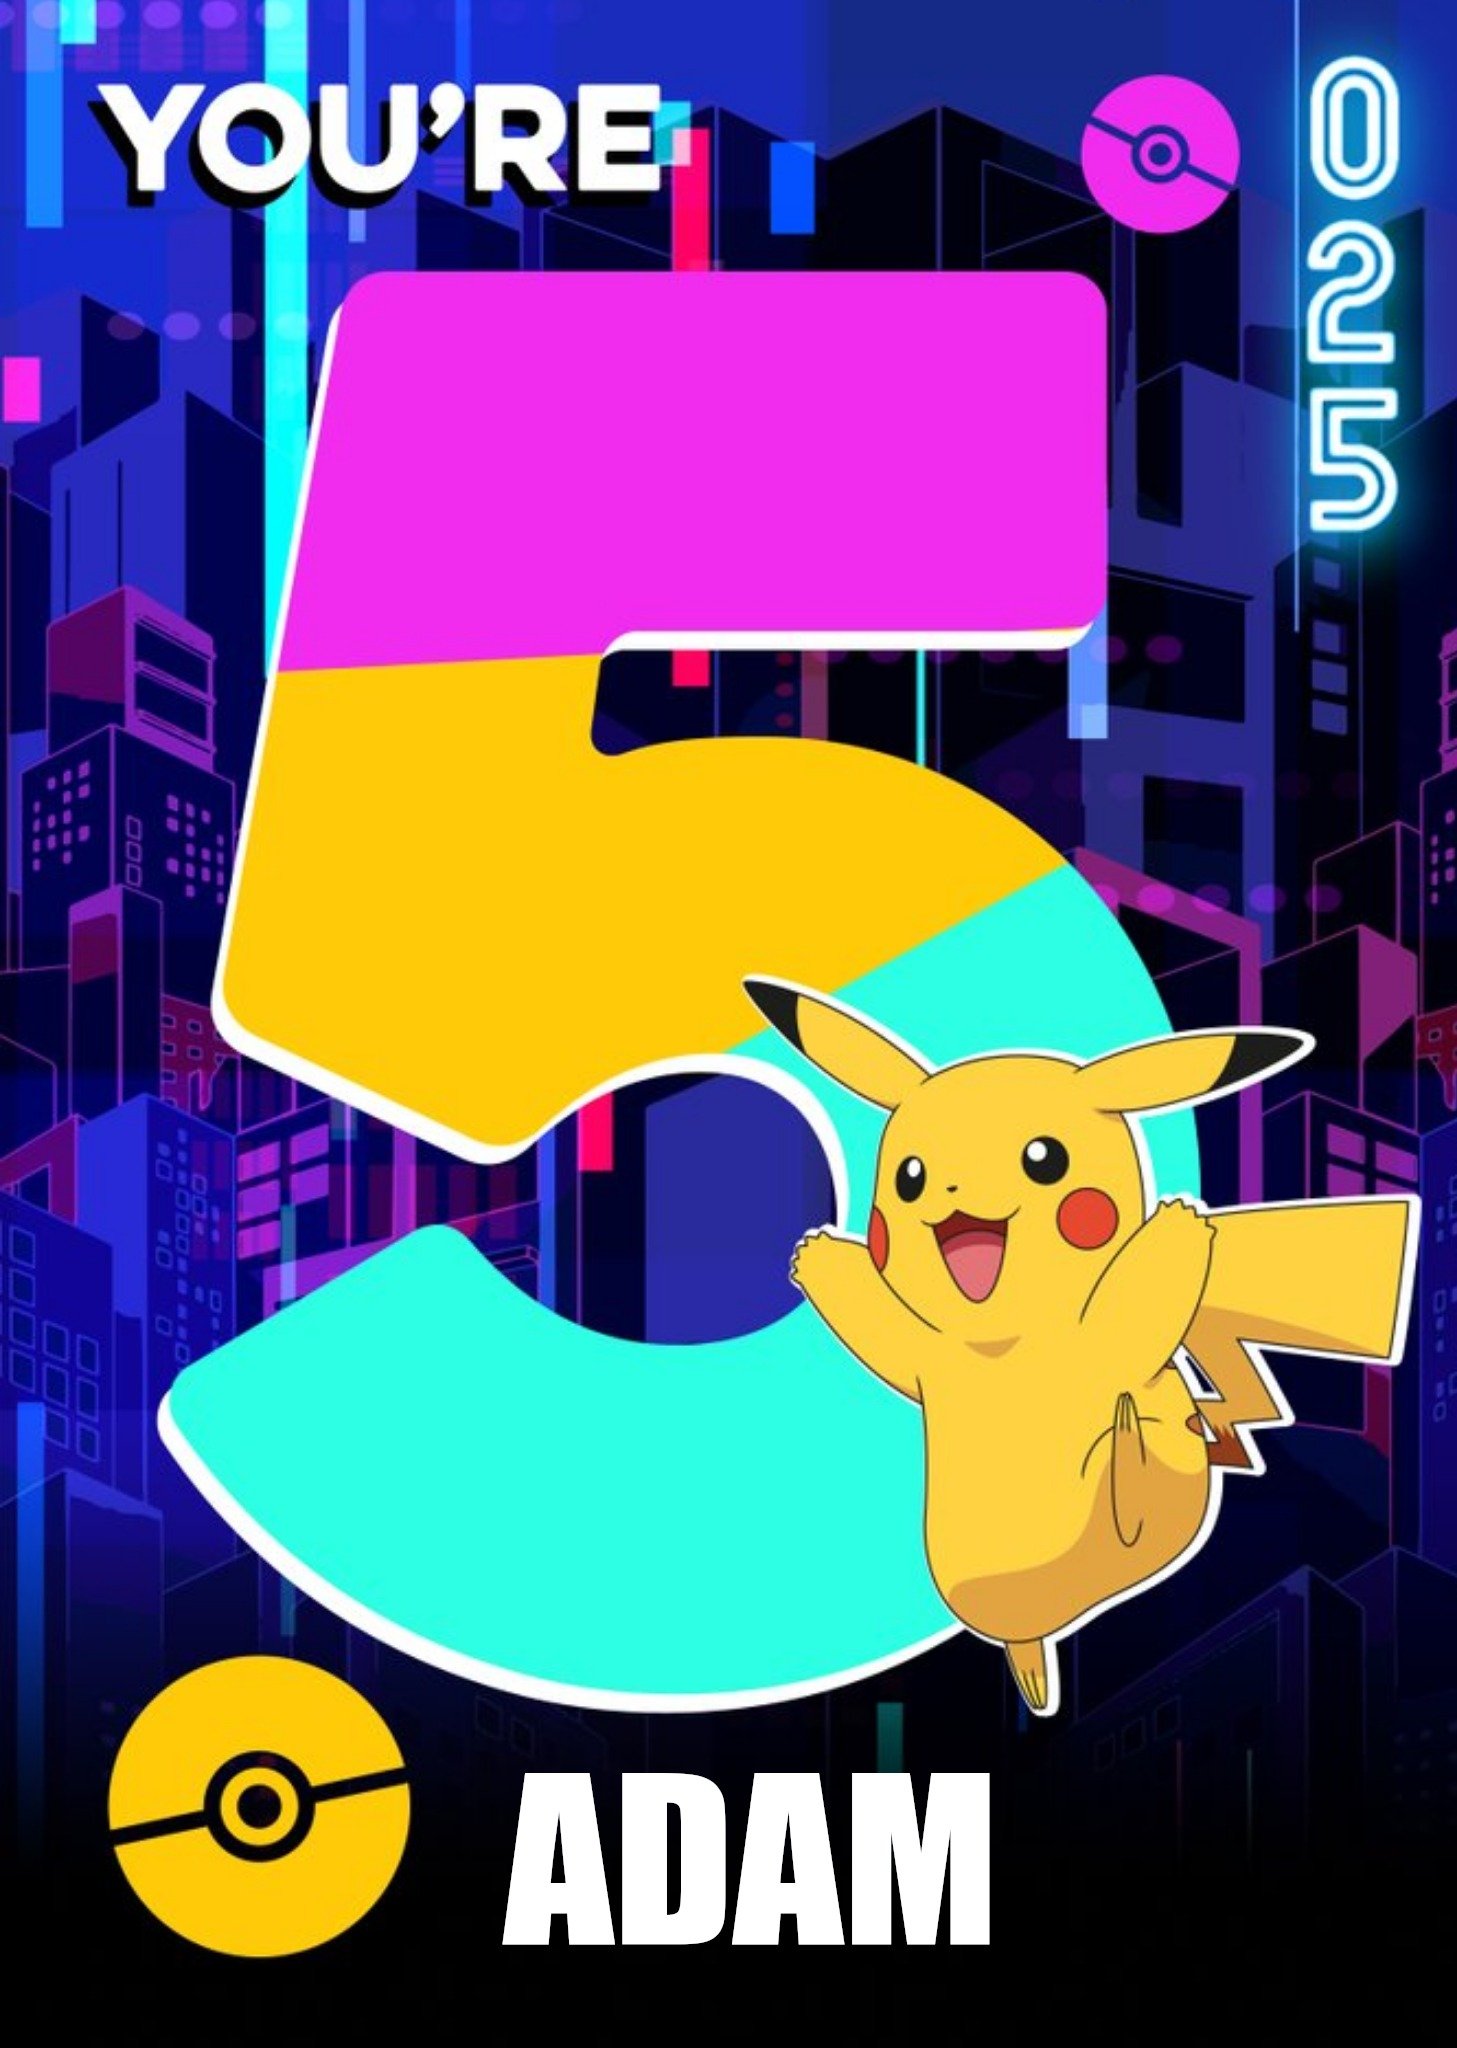 Pokemon Pikachu You Are 5 Age Birthday Card Ecard